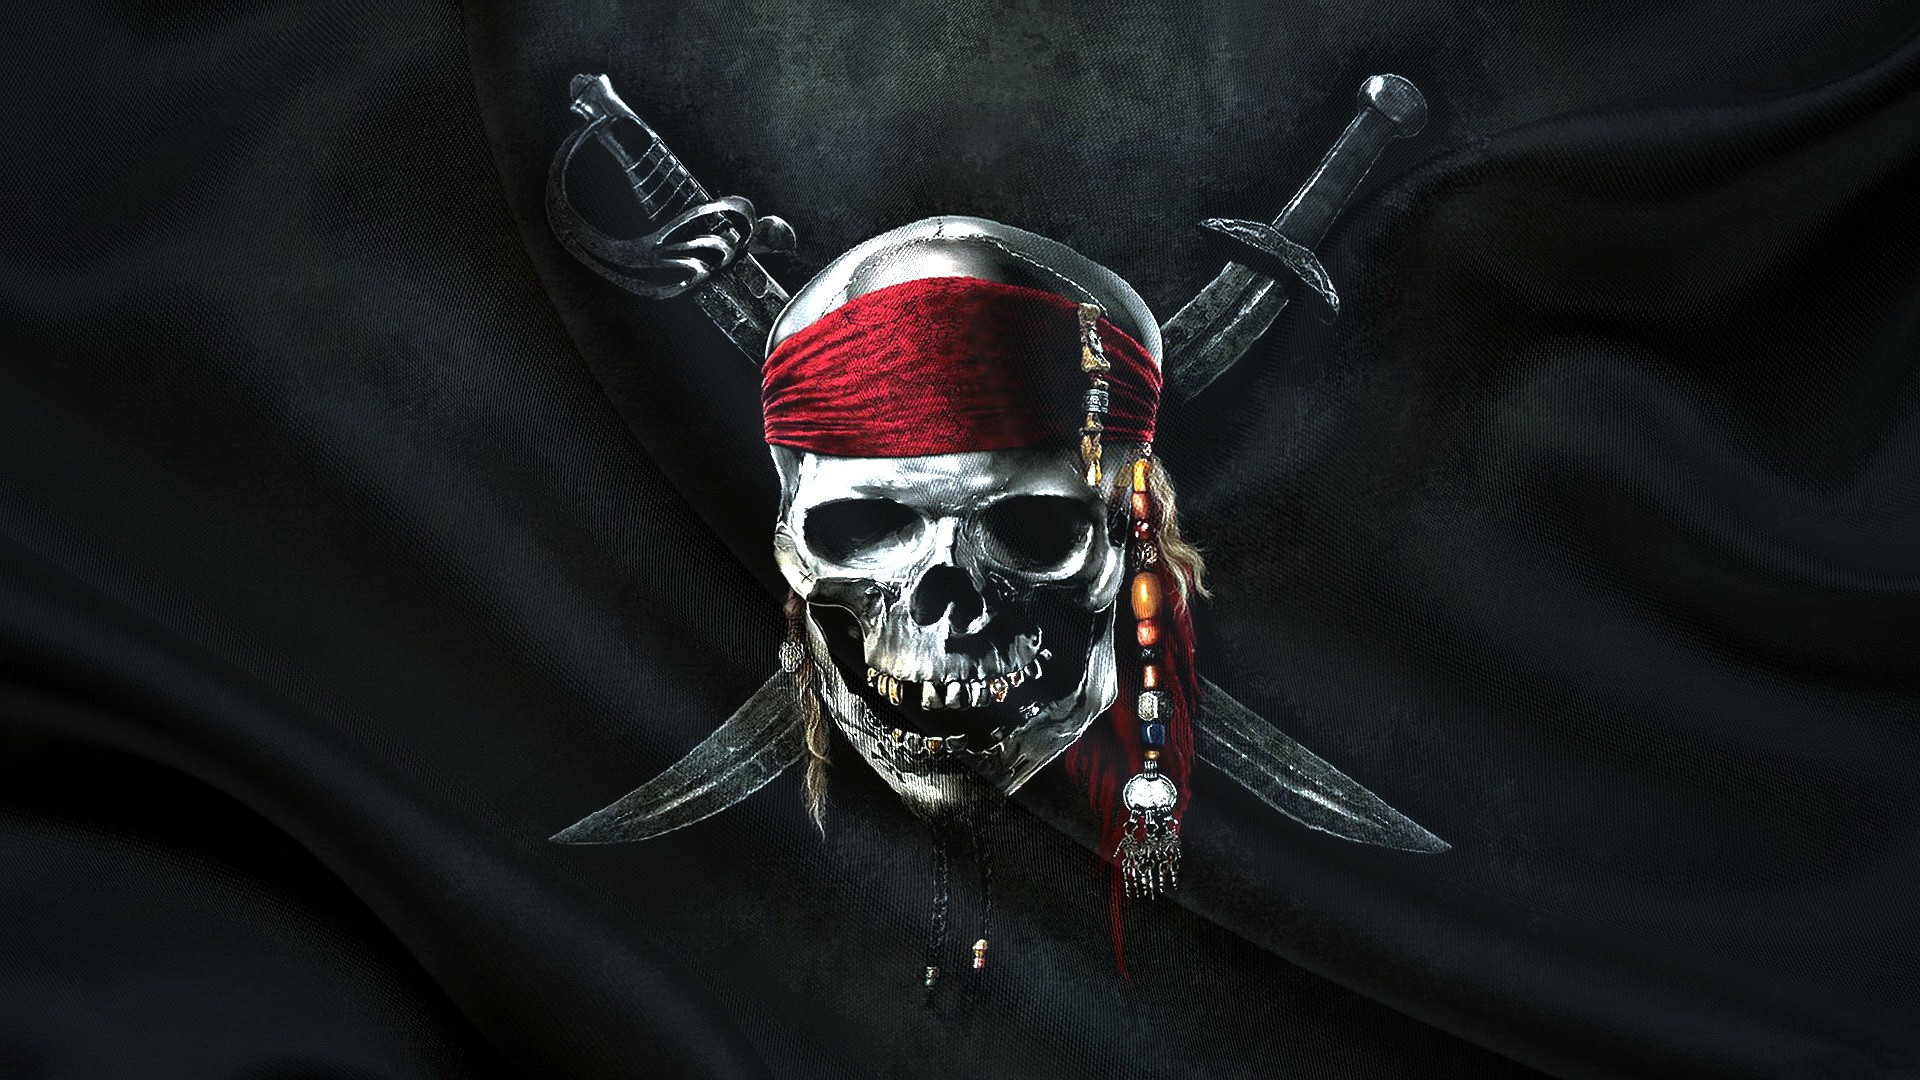 General 1920x1080 Jolly Roger pirates flag artwork digital art minimalism simple background sword skull bandeau top teeth